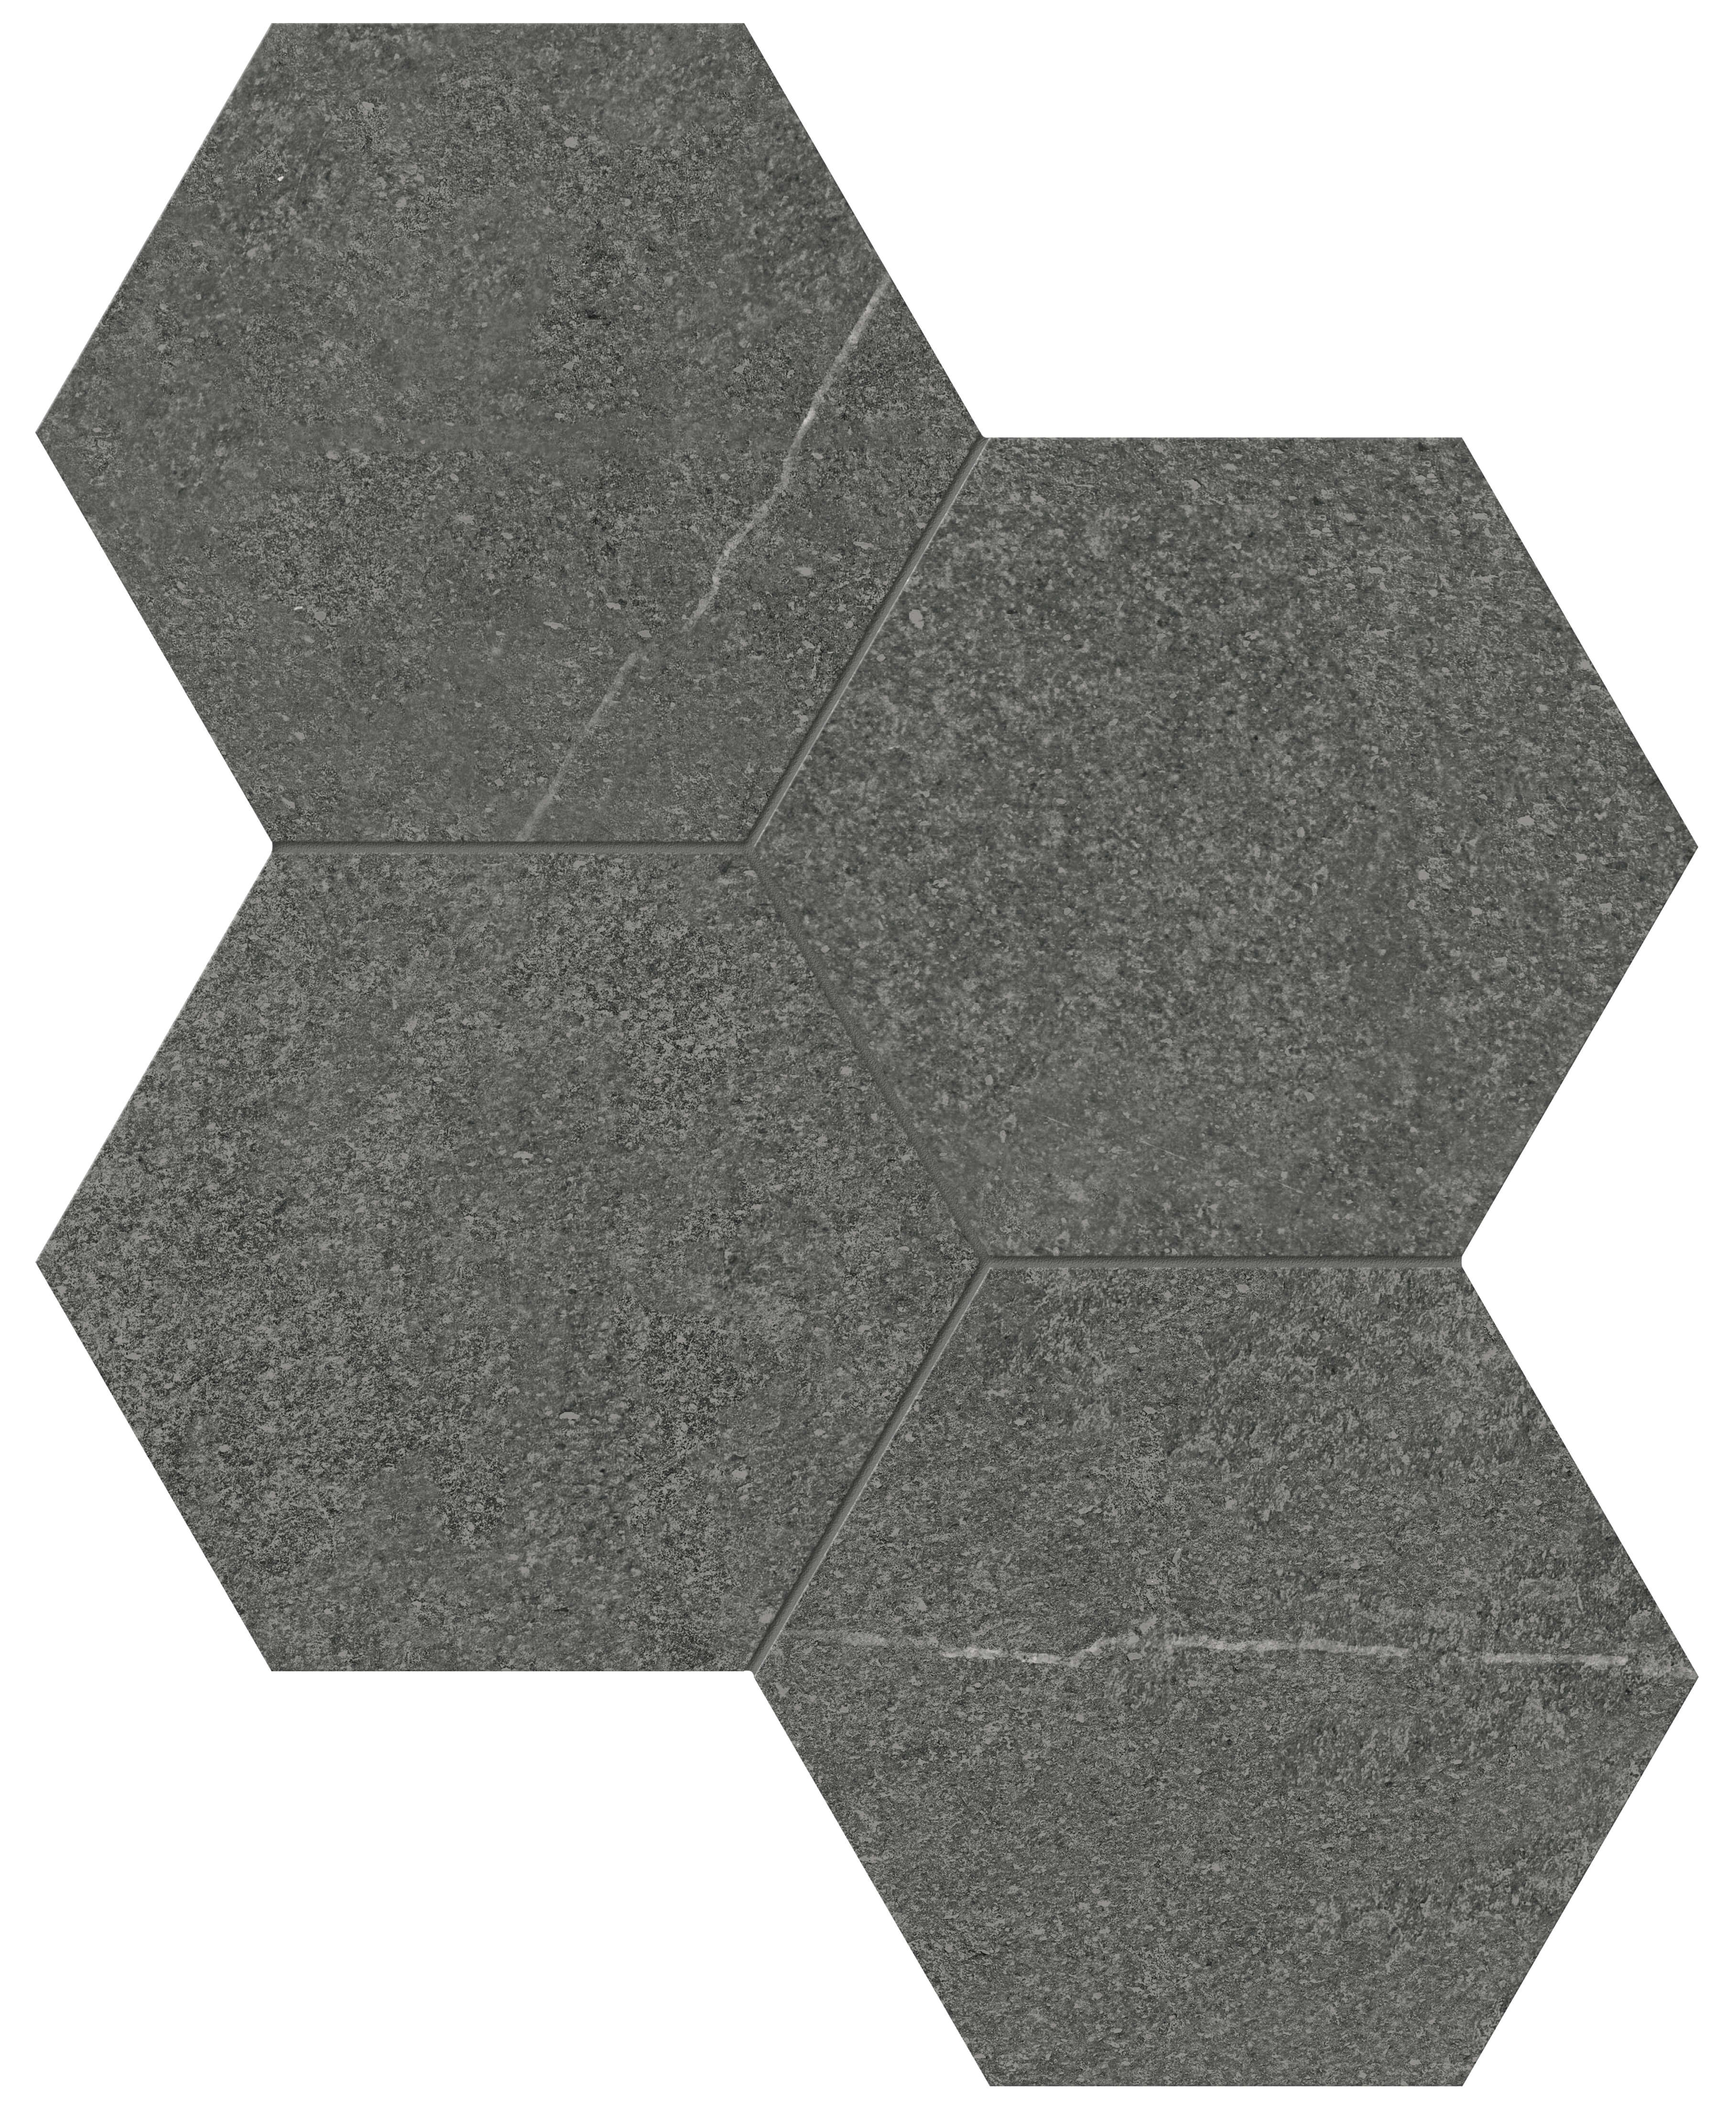 STP Grasten 6 inch Hexagon Mosaic Carbon